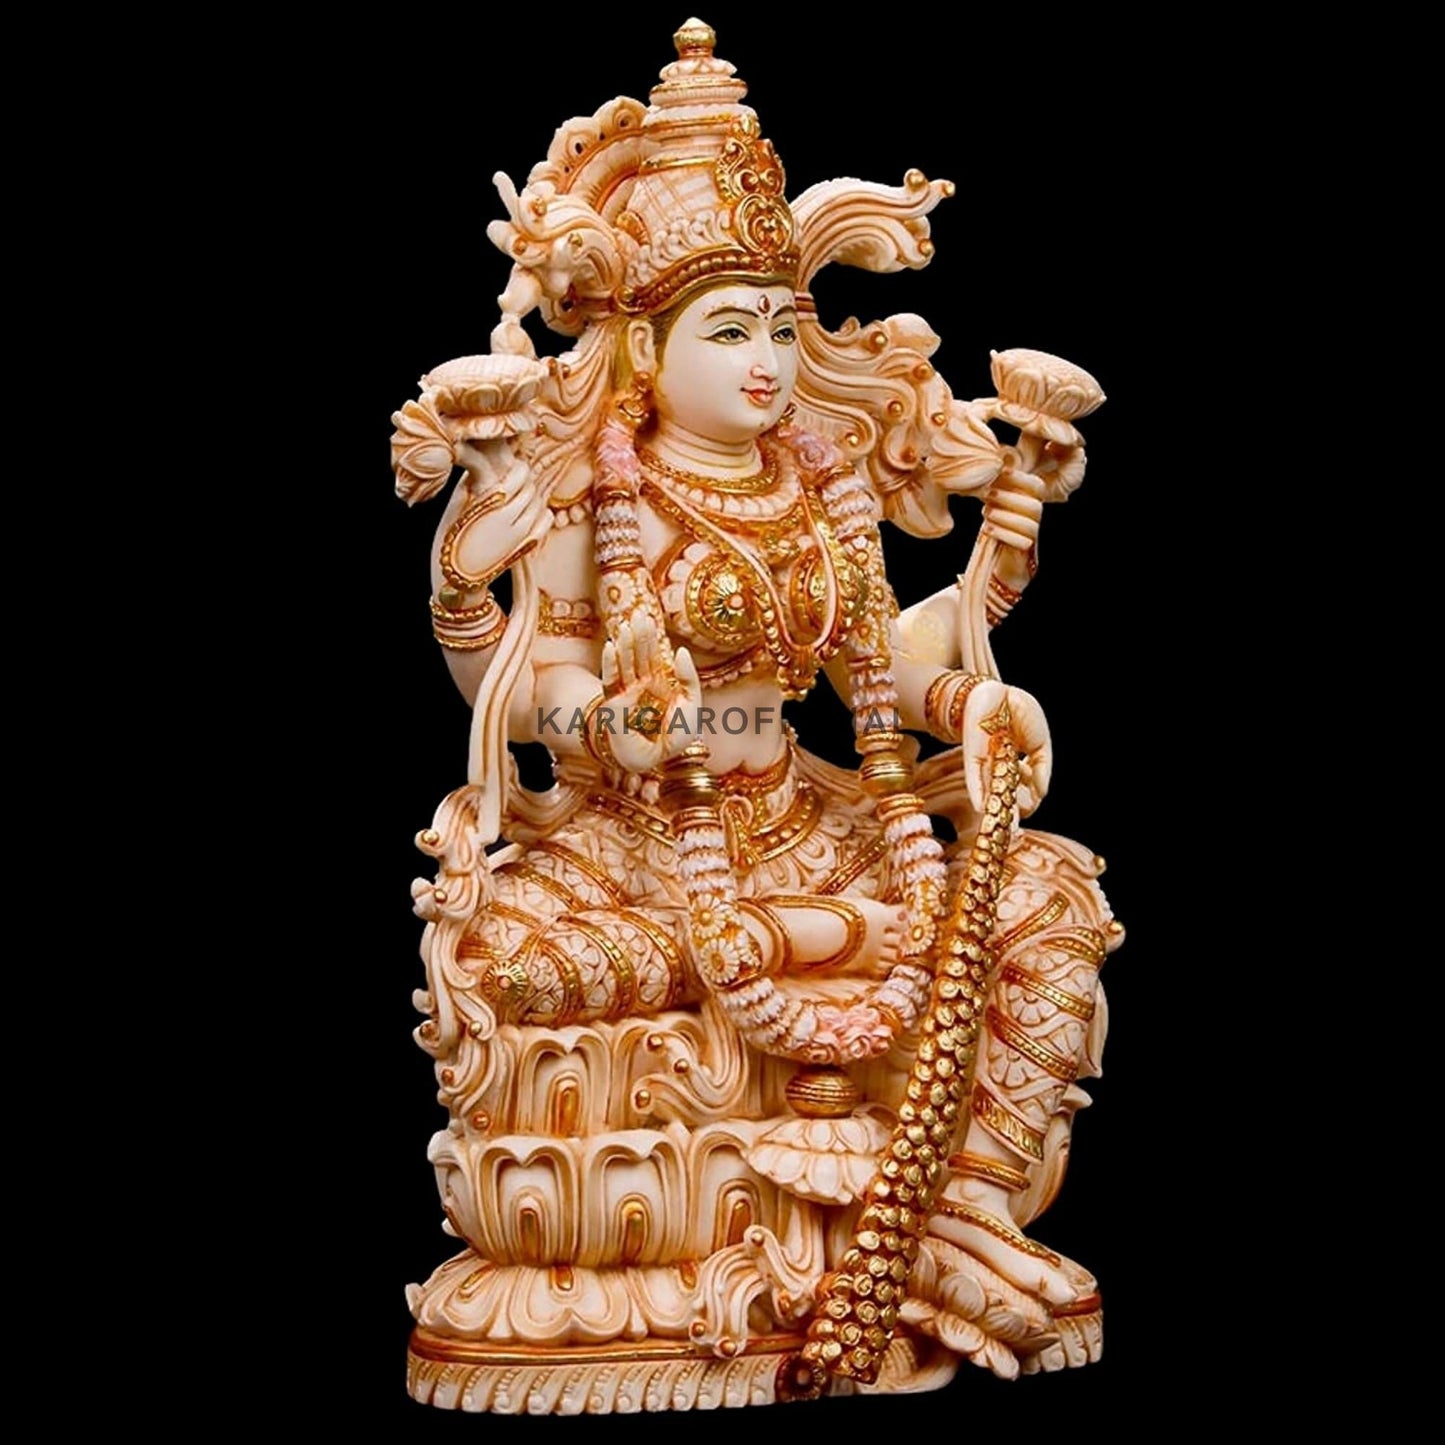 Lakshmi statue - 15 inches Marble goddess Indian goddess Big Lakshmi Statue - Marble Figurine of Laxmi, Goddess of wealth, Immortal nectar, Laxmi idol - Lakshmi sculpture Home decor Anniversary gifts